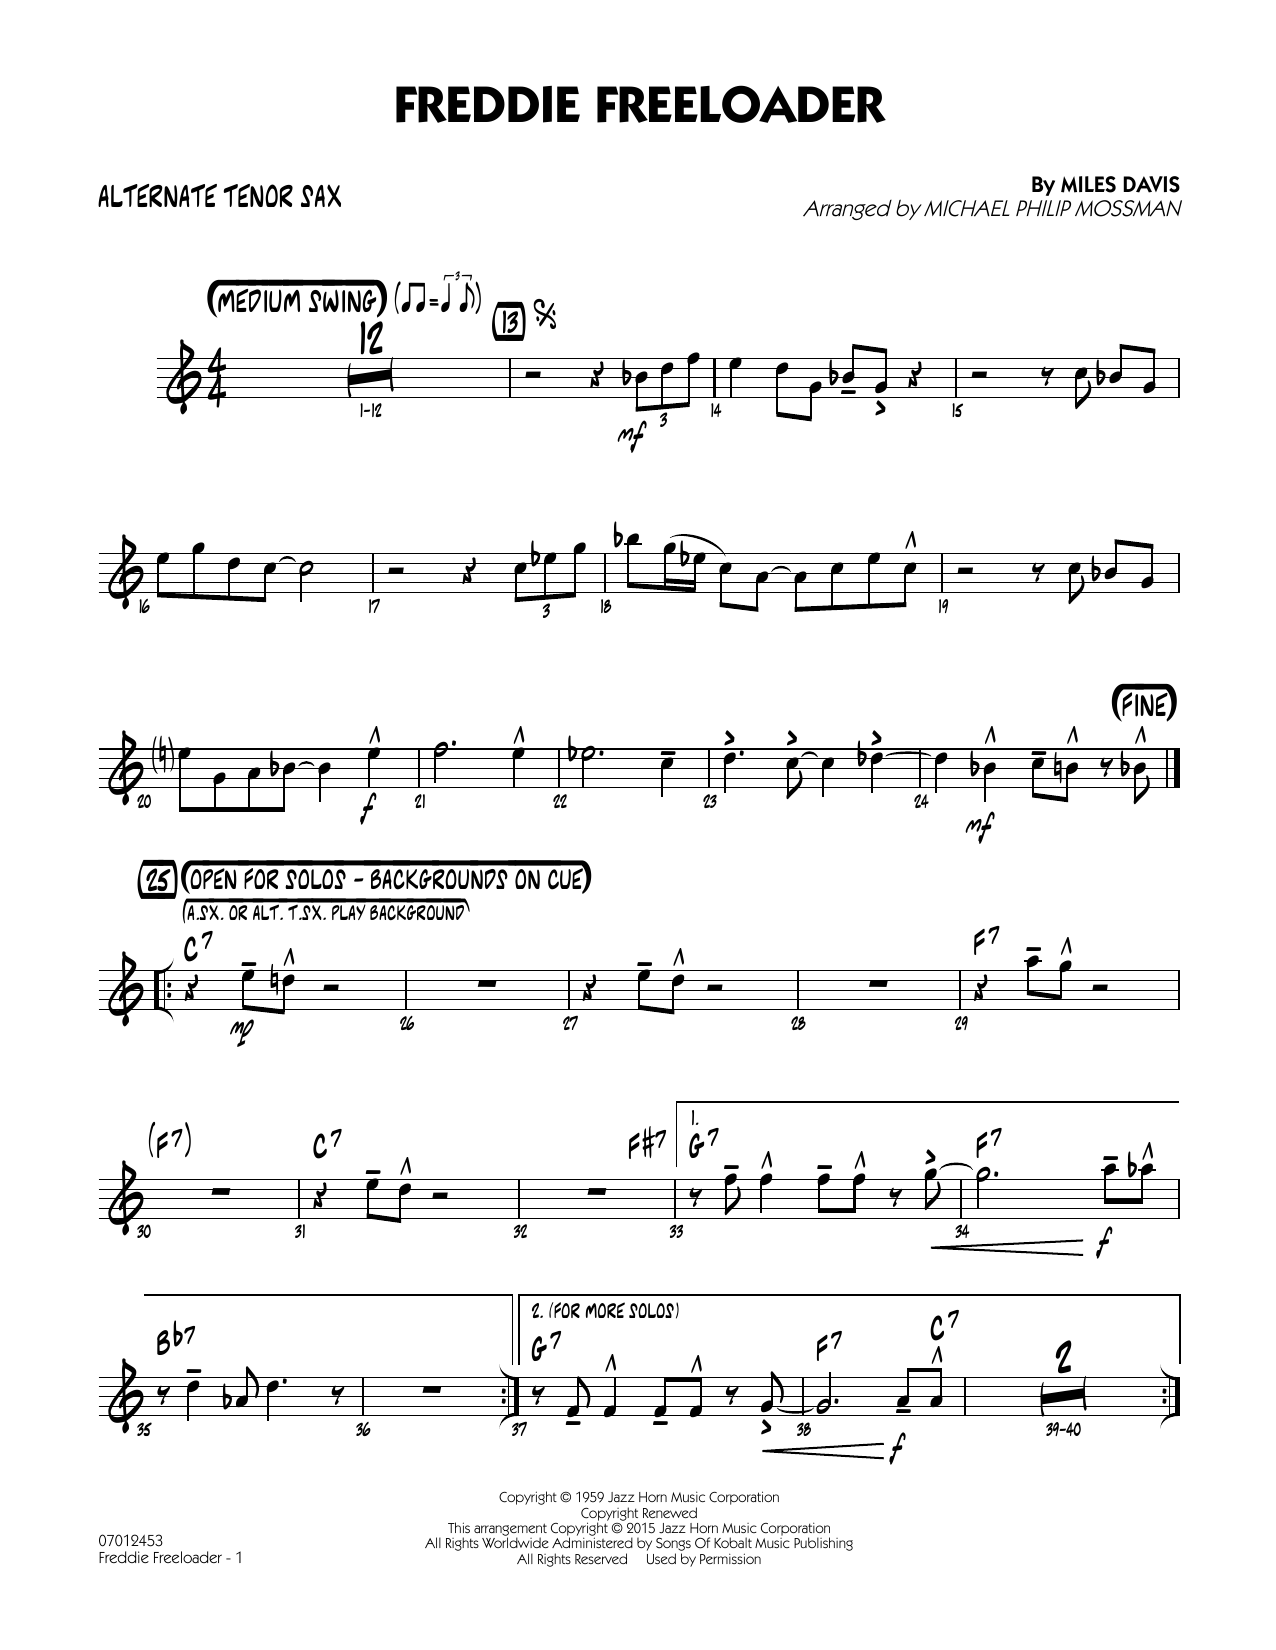 Michael Philip Mossman Freddie Freeloader - Alternate Tenor Sax sheet music notes and chords. Download Printable PDF.